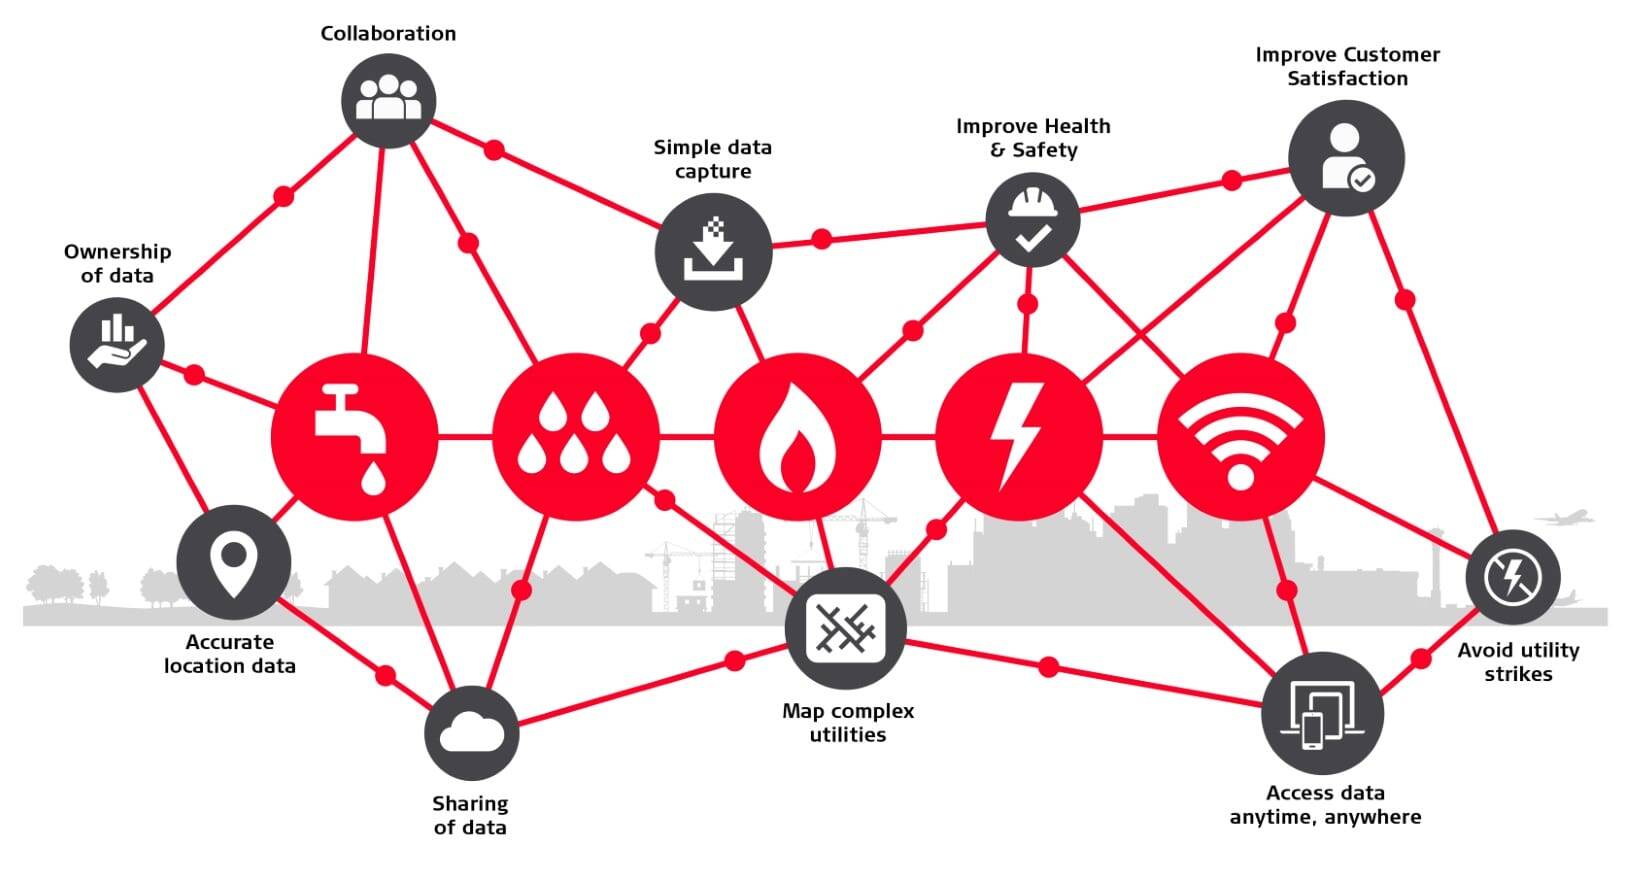 Shape the future: Achieve a digital utility network